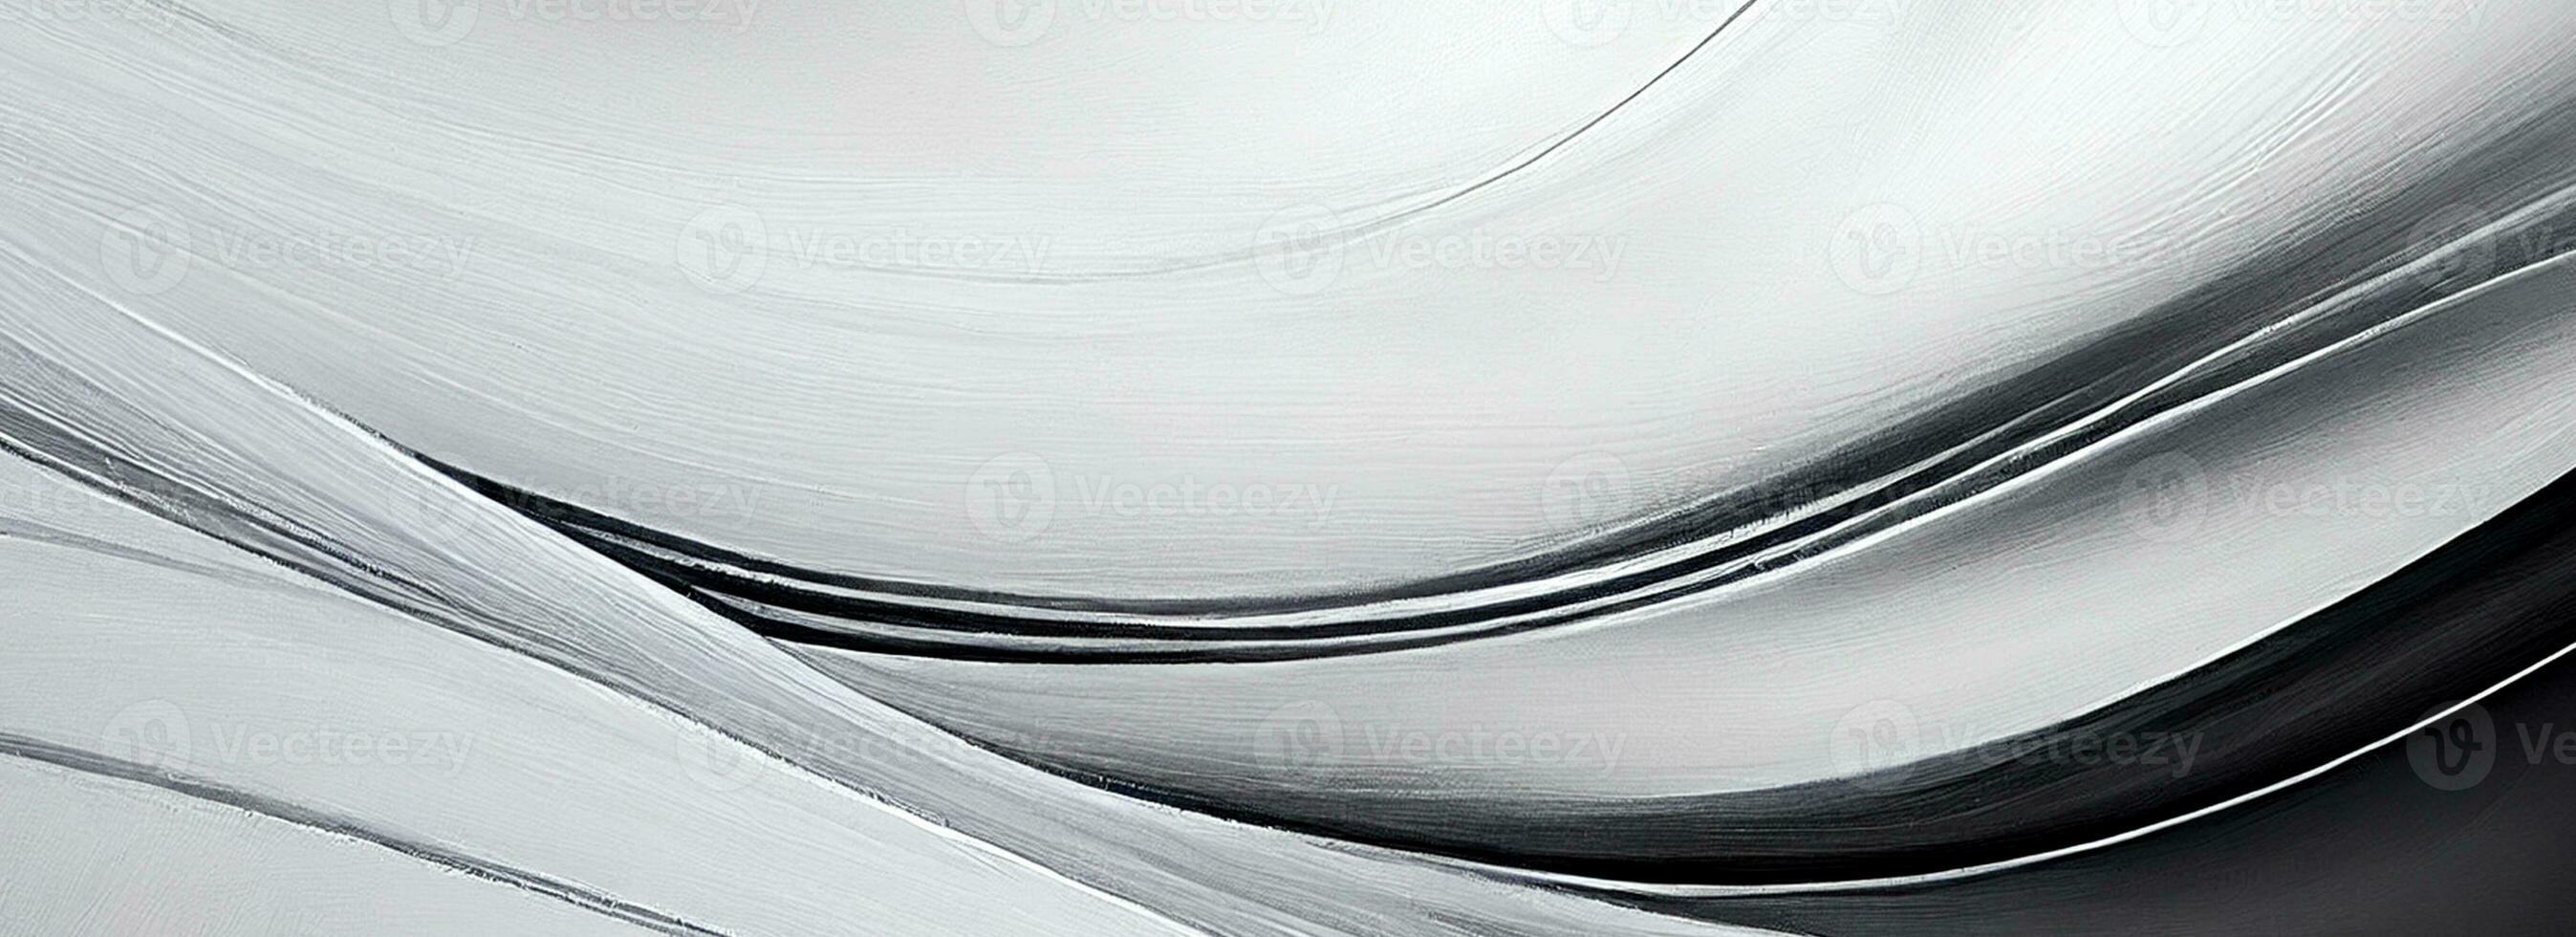 abstrato suave ondas movimento cinzento fundo. foto